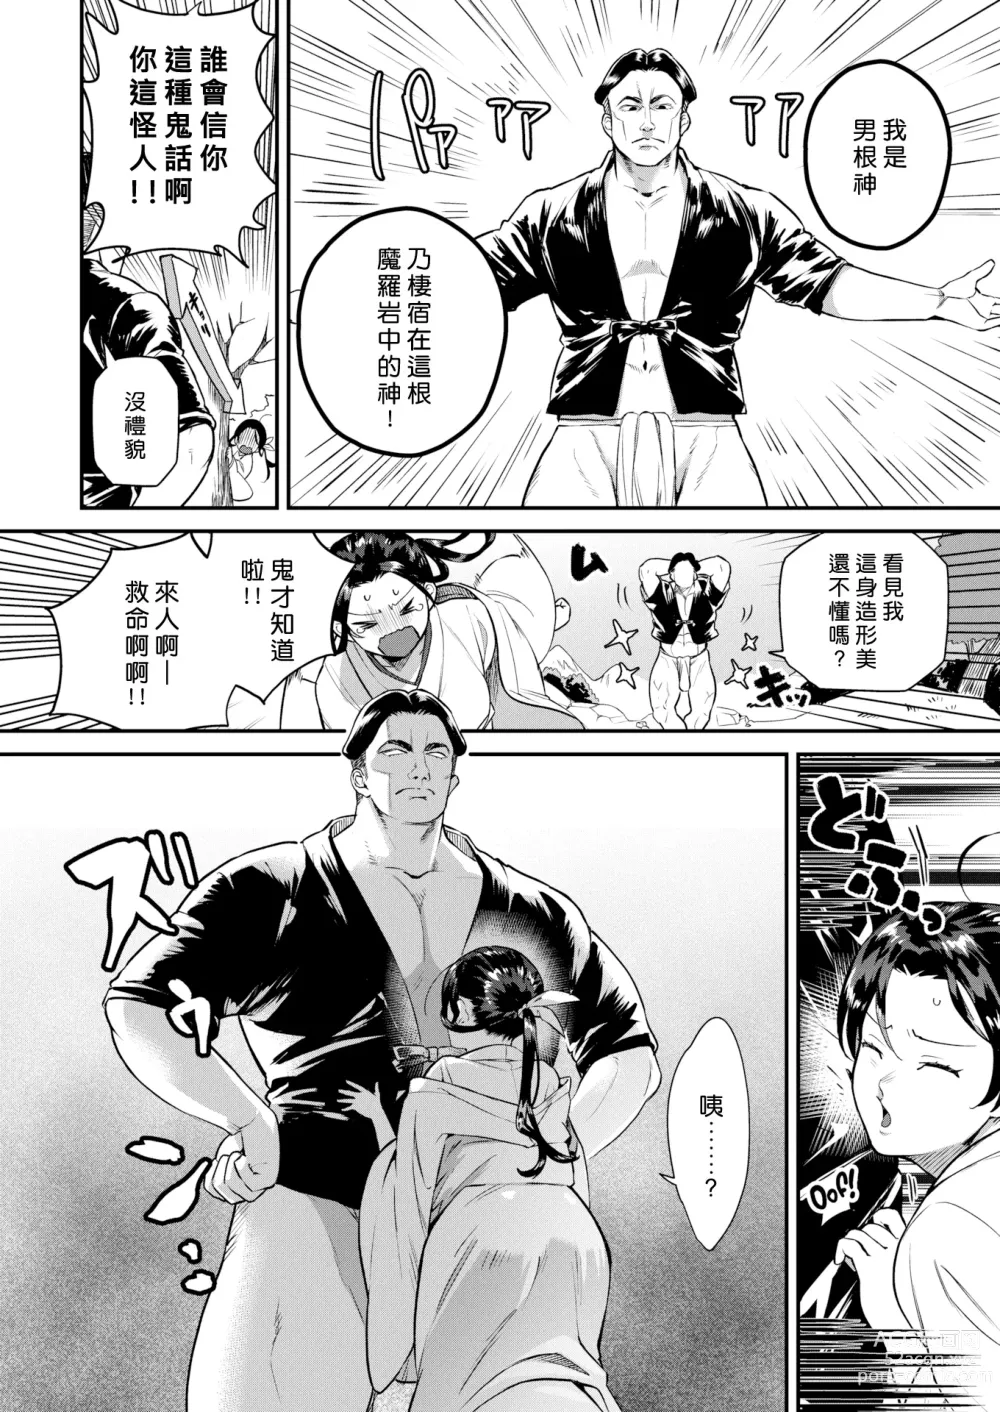 Page 6 of doujinshi 『雨乞い乙女』